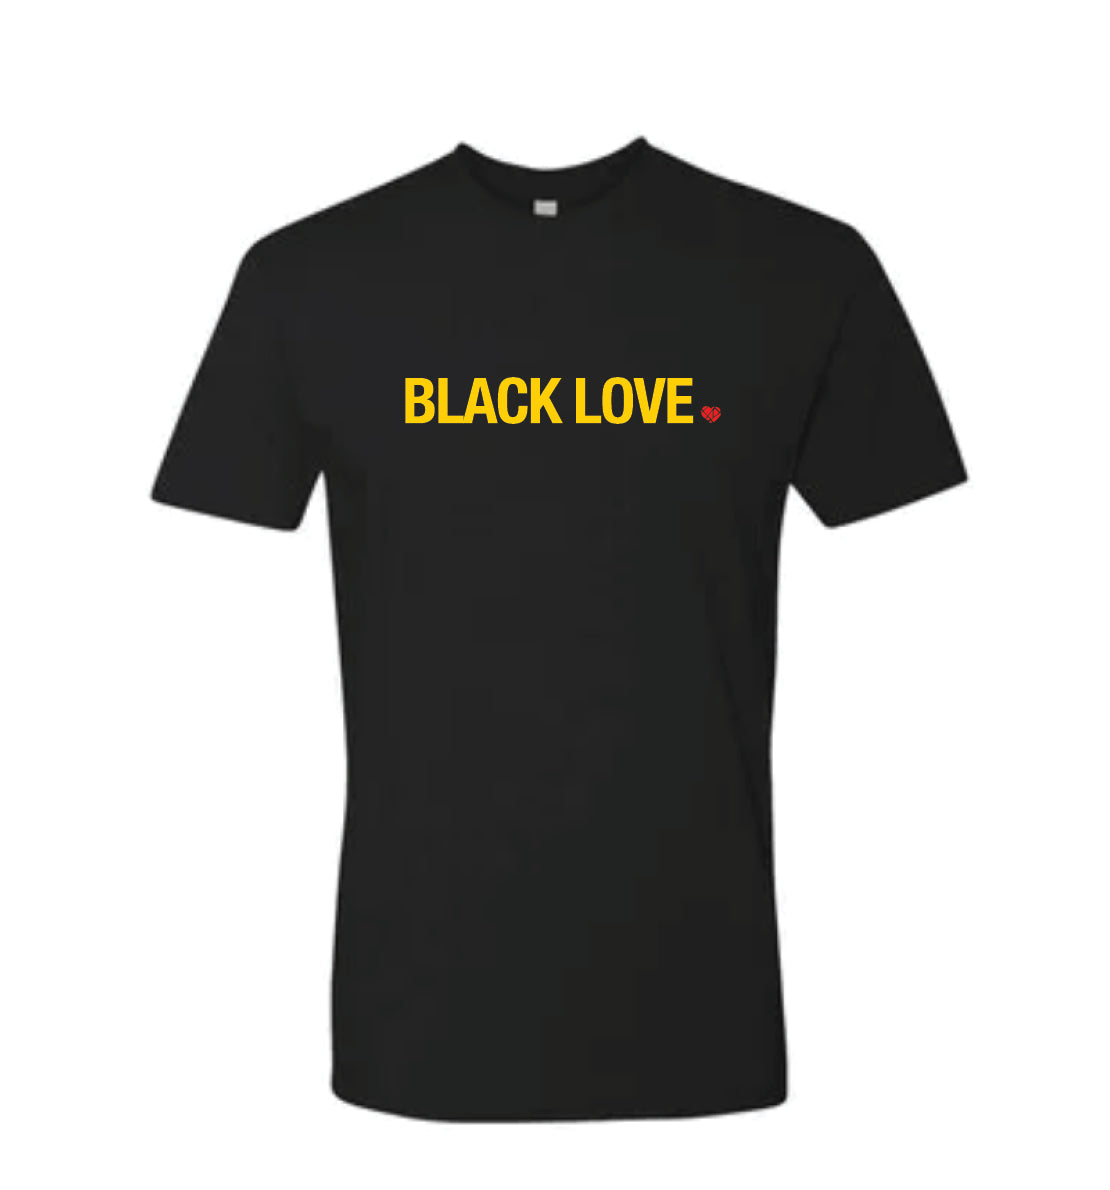 Black Love Period t shirt